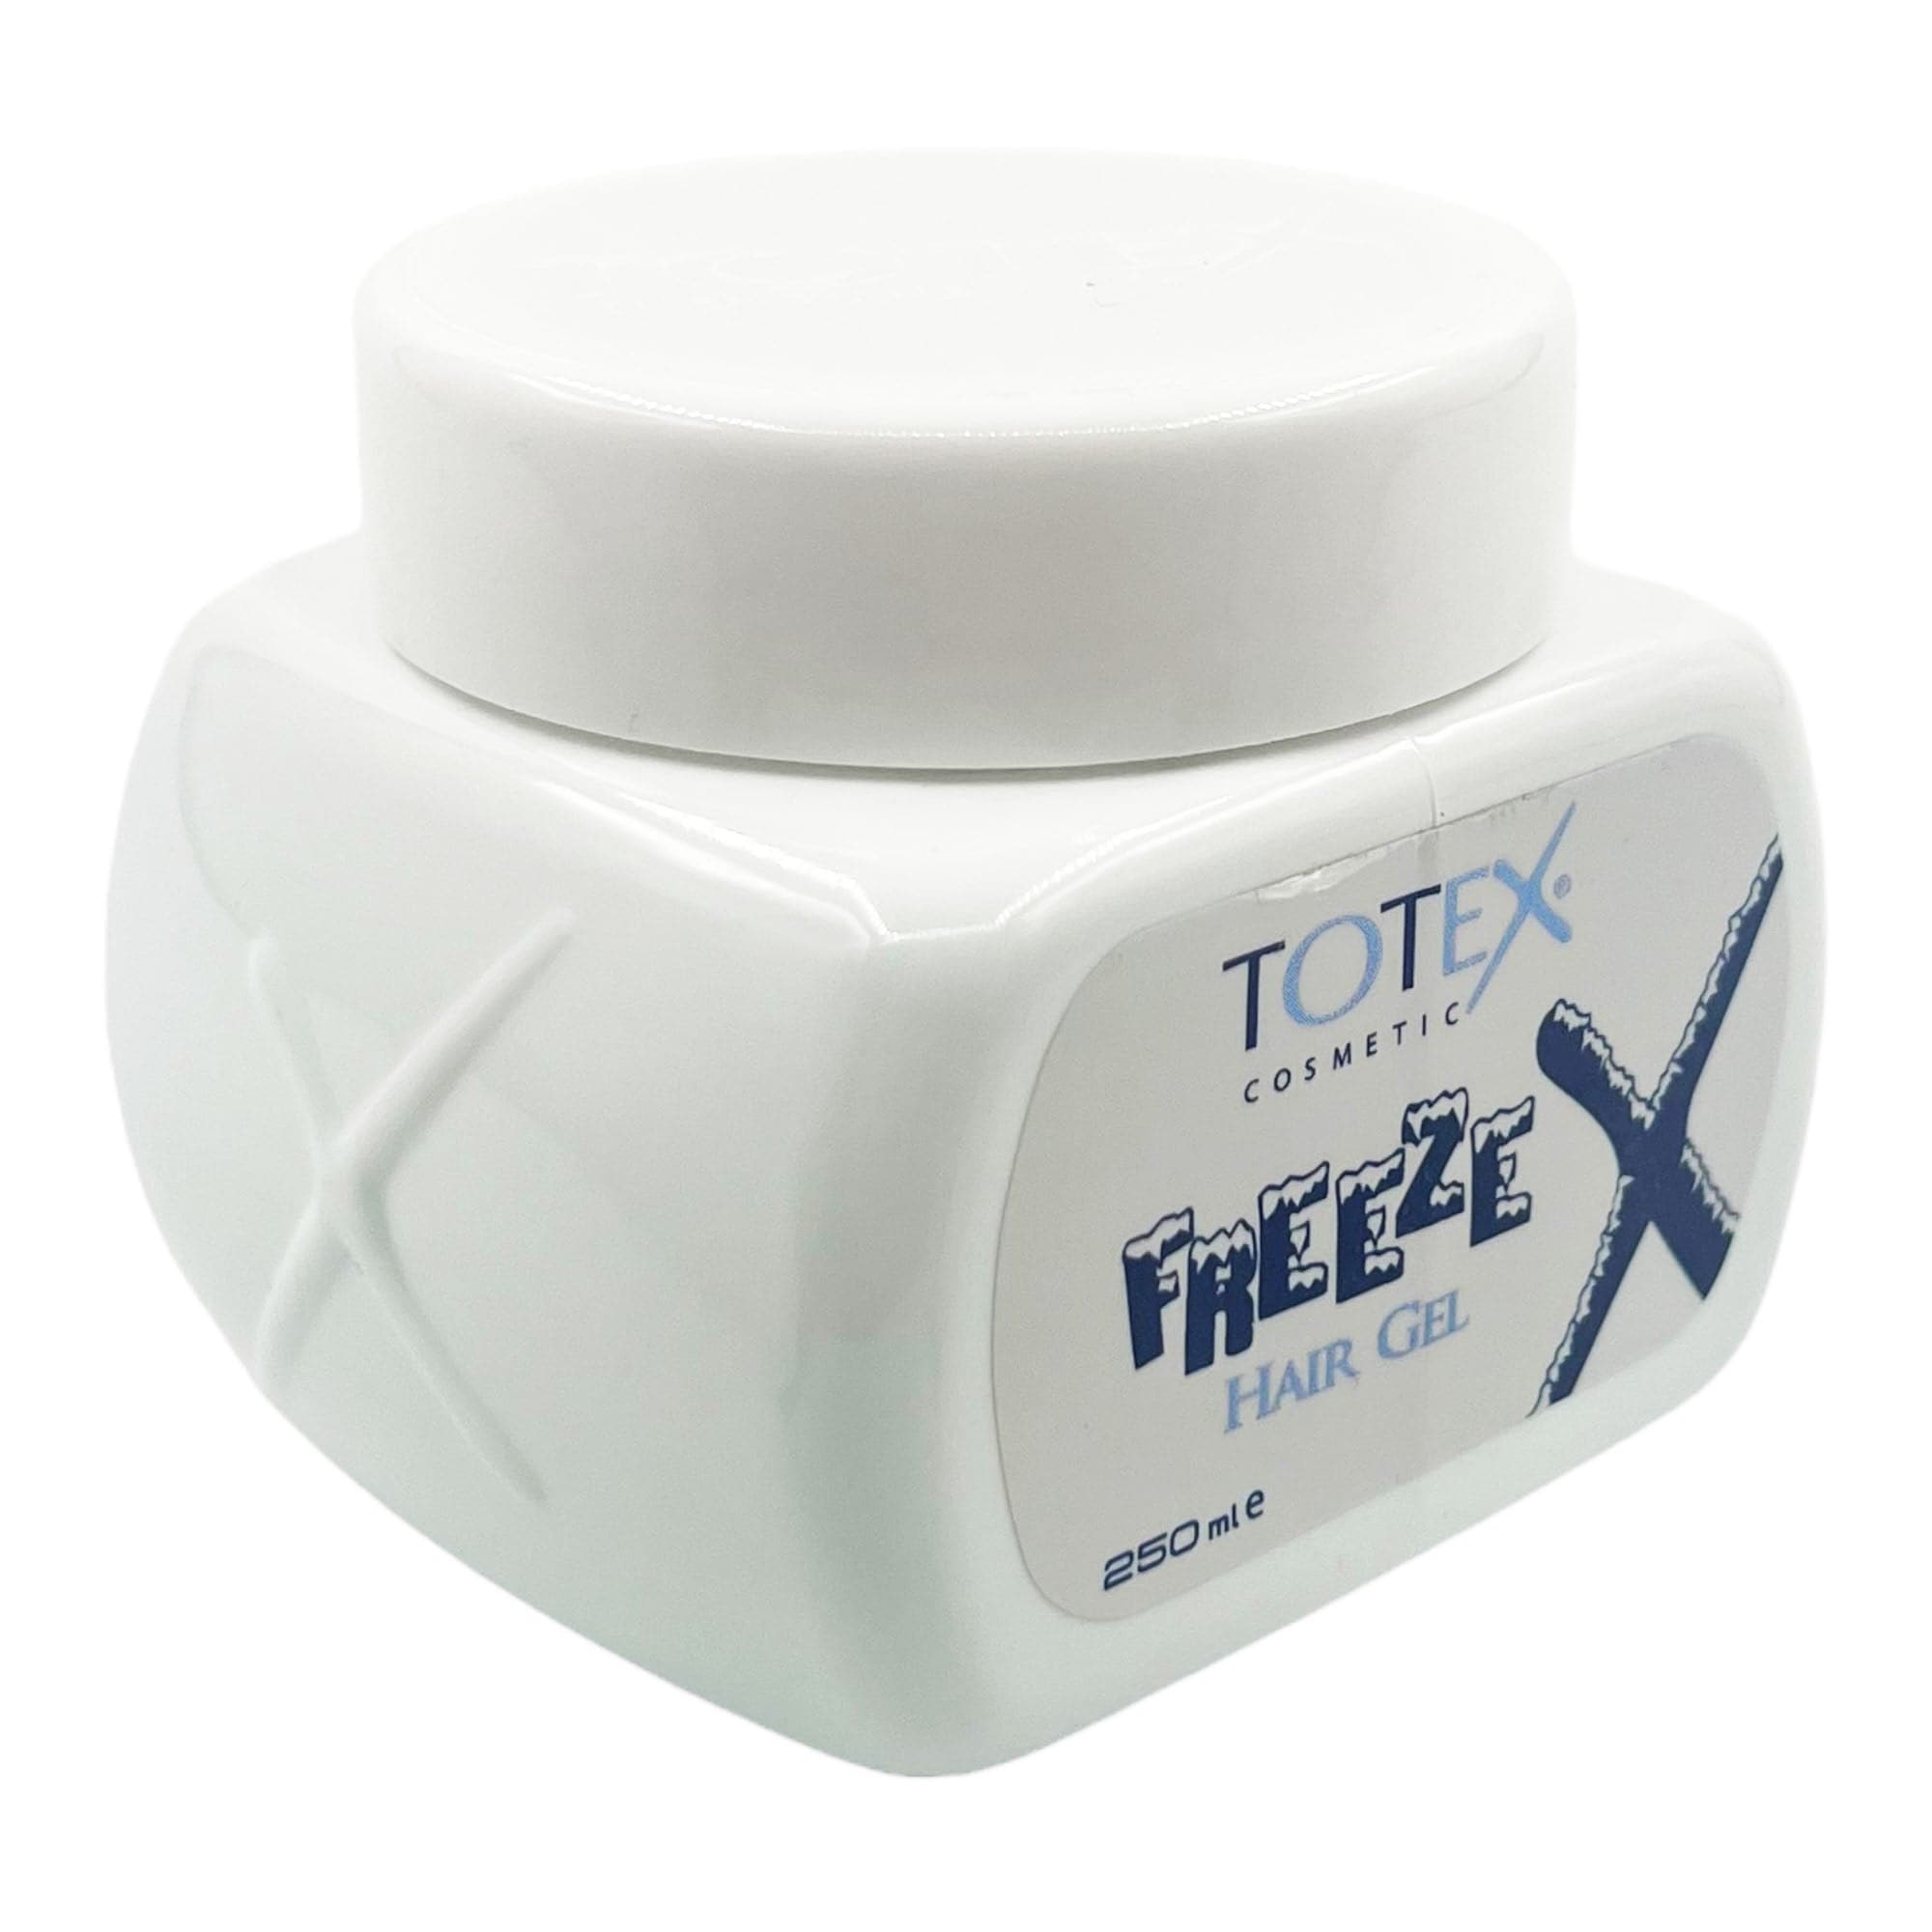 Totex - Hair Gel Freeze 250ml